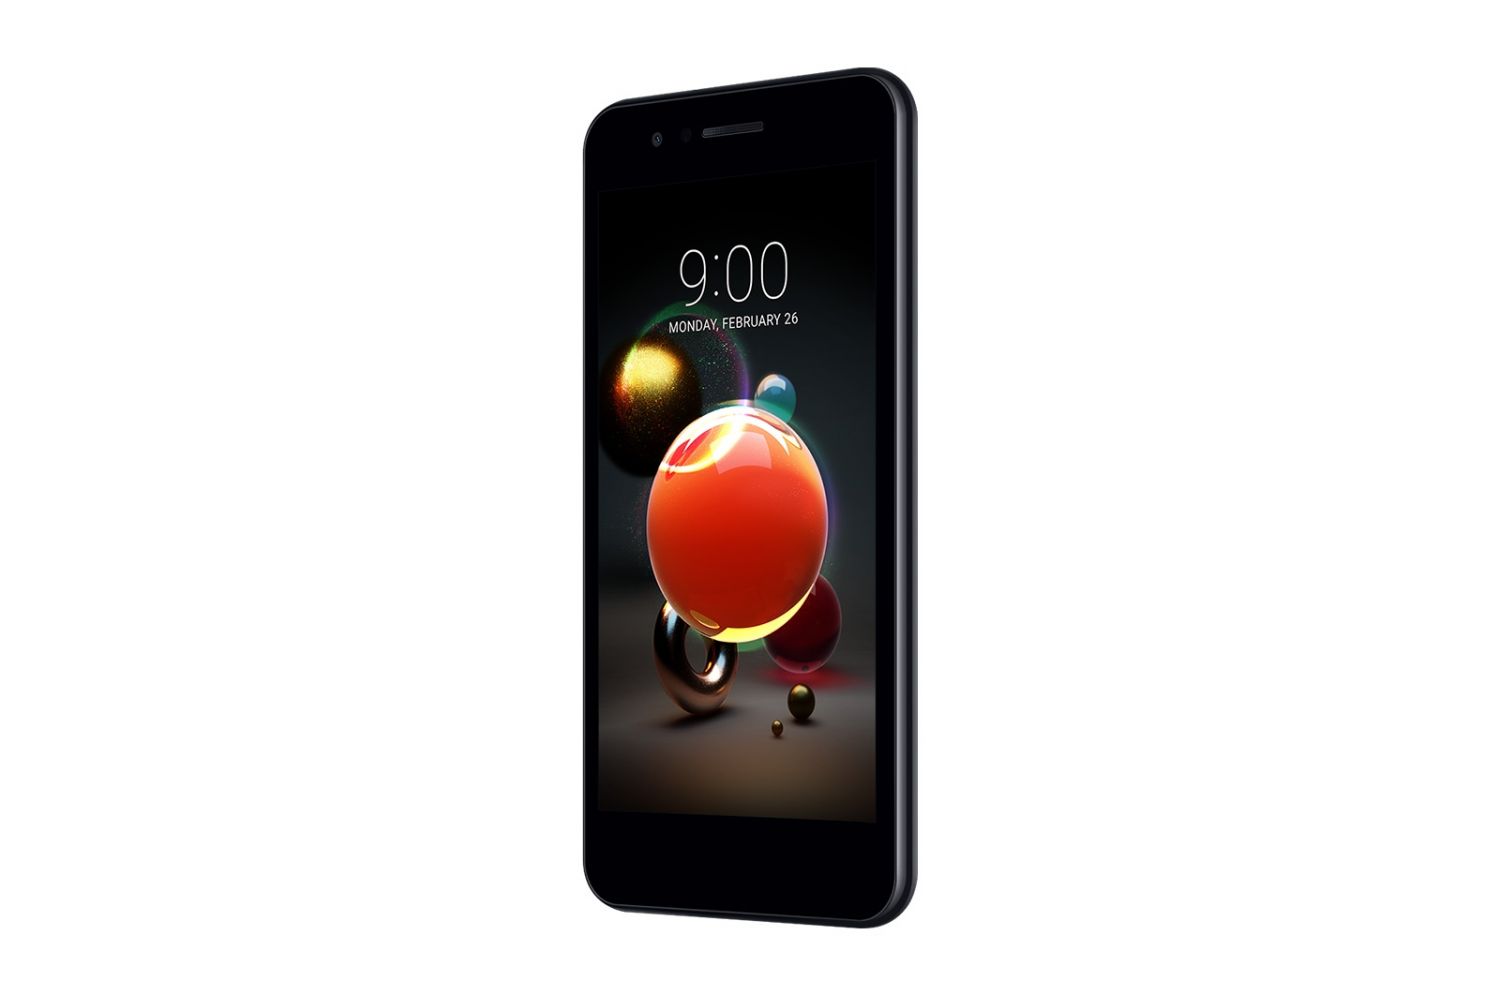 LMX210EMW - Telfono inteligent LG K9 12,7 cm (5